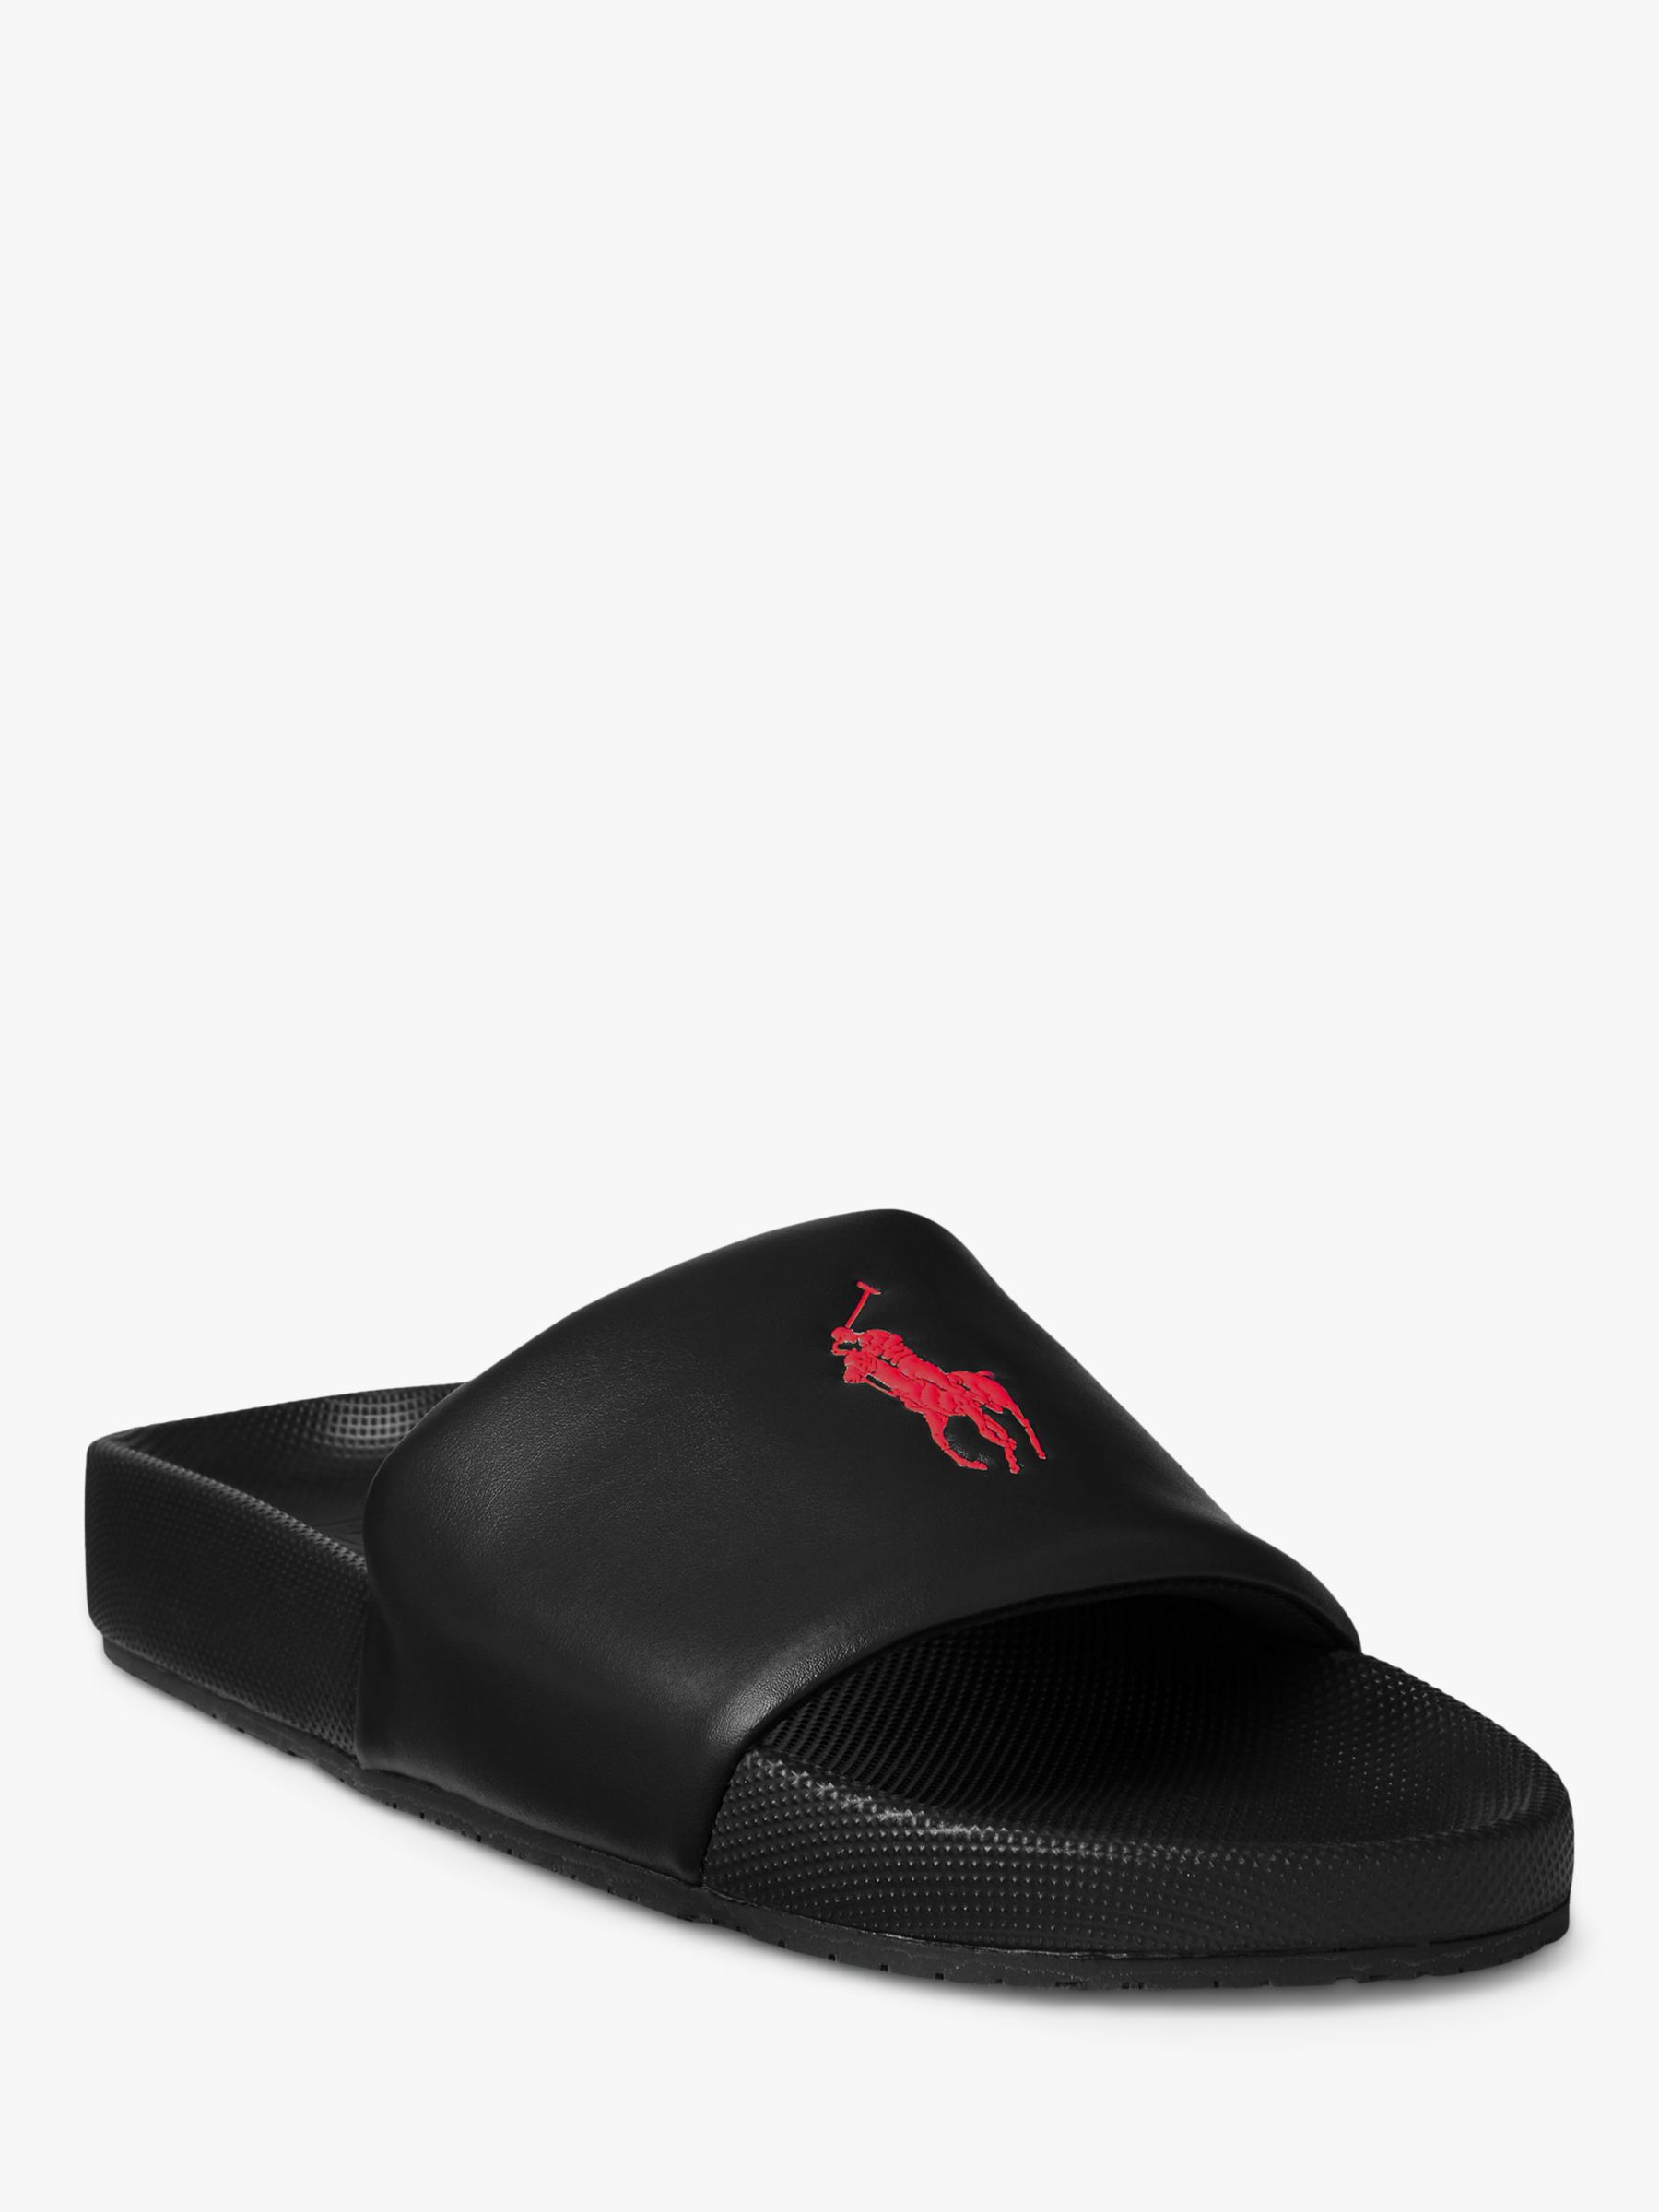 Polo Ralph Lauren Cayson Pony Slide Sandals, Black/Red at John Lewis ...